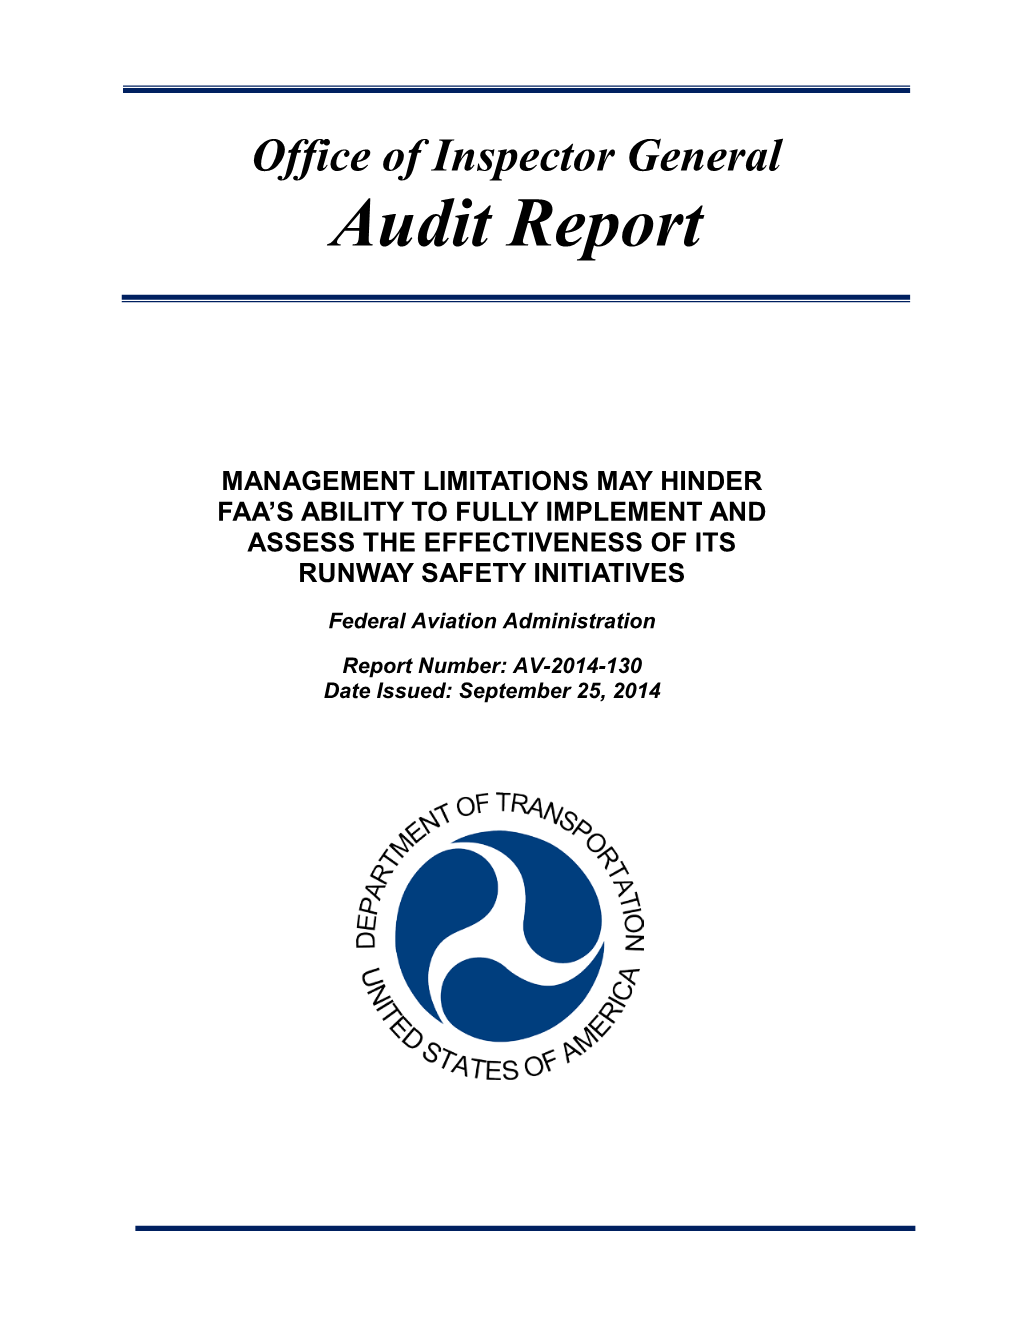 FAA Runway Safety Program Audit Report^9-25-14.Pdf